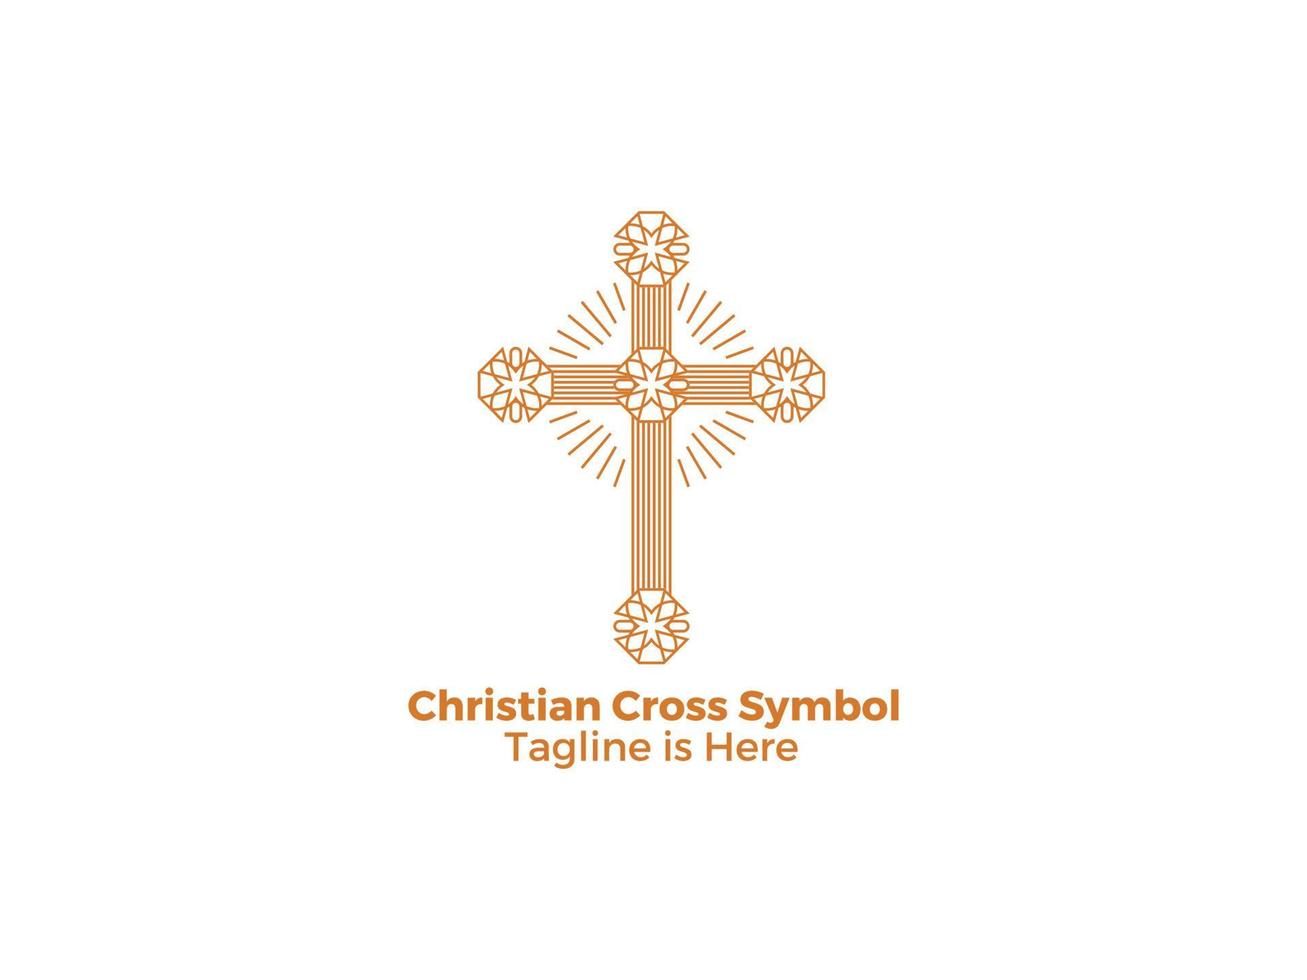 dekorativ religion kristen katolicism kors ikonen isolerad på vit bakgrund gratis vektor